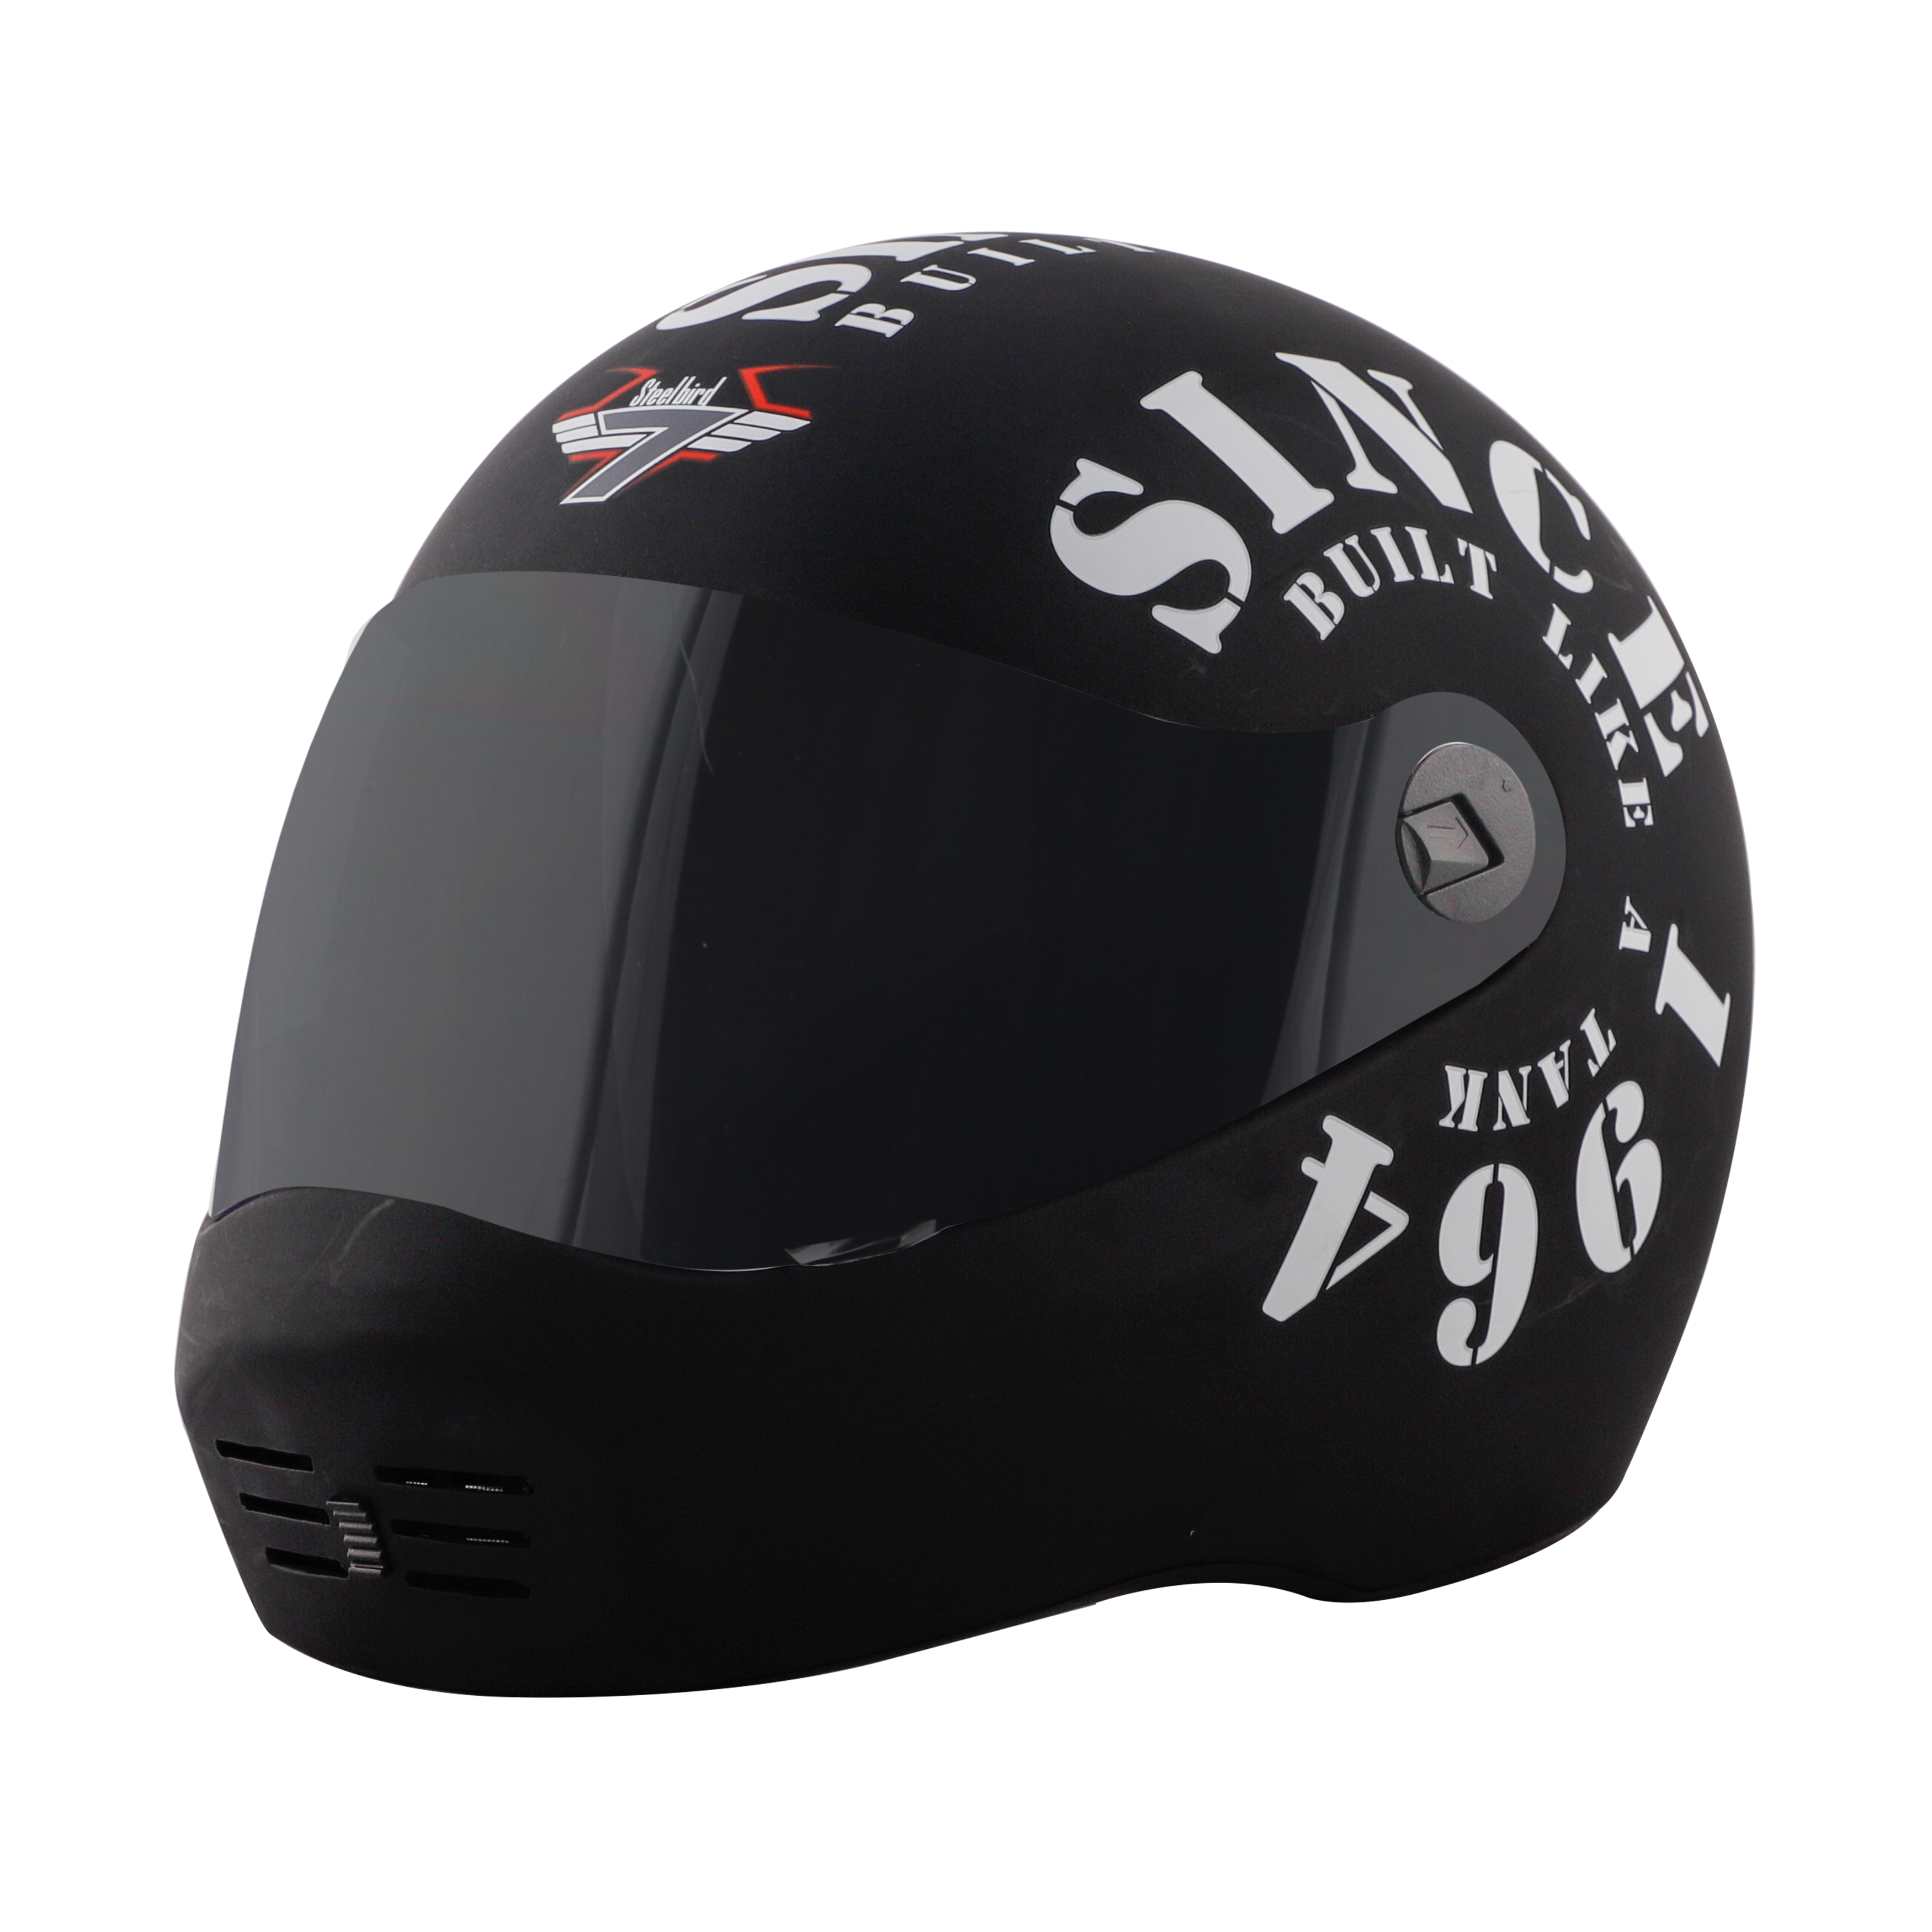 Steelbird SB-01 Tank Full Face ISI Certified Graphic Helmet (Matt Black White with Smoke Visor)